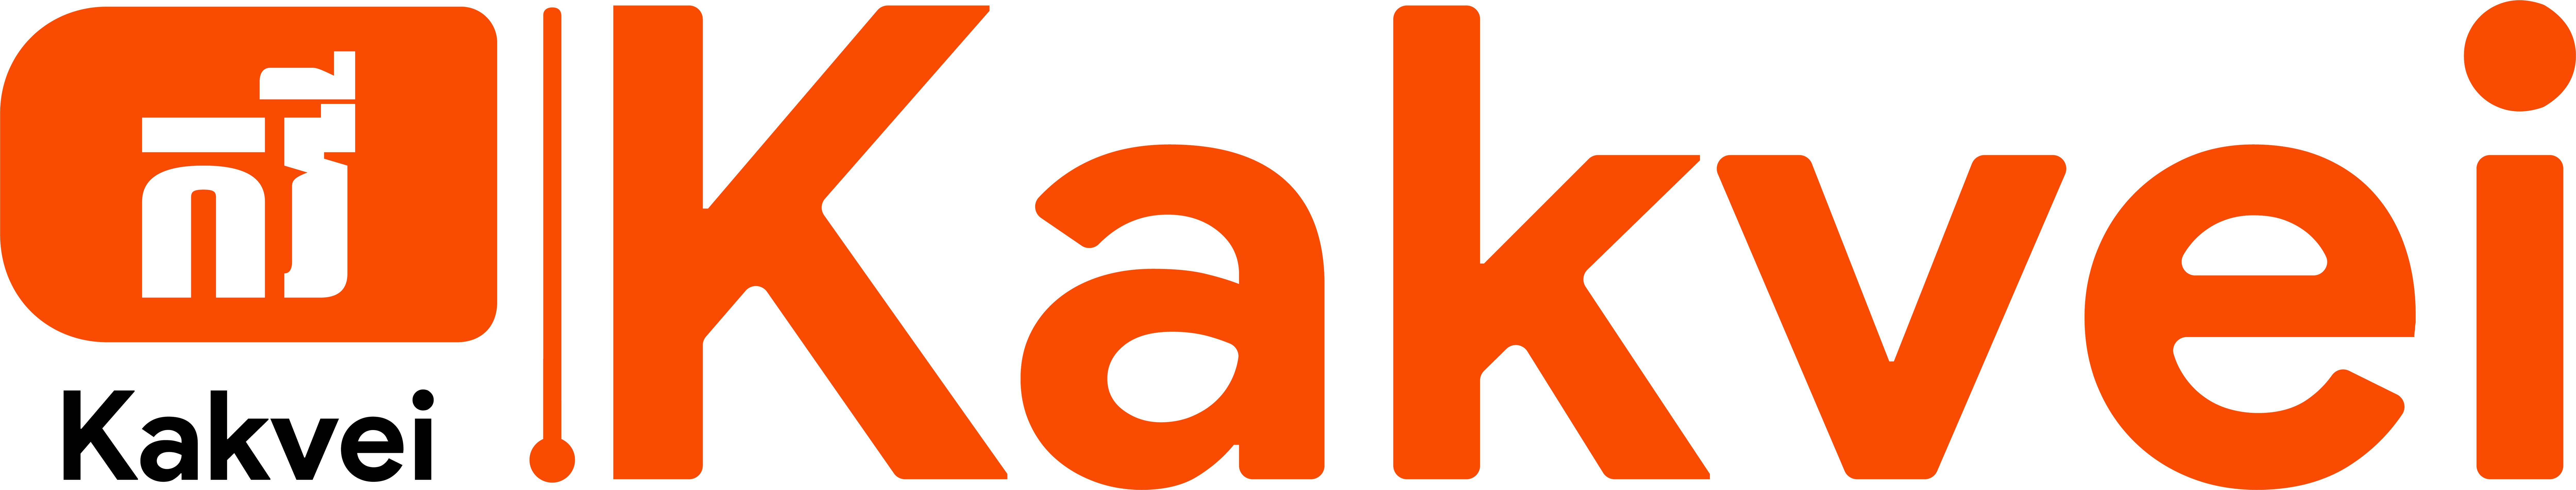 Kakvei brand logo - Kakvei main logo English